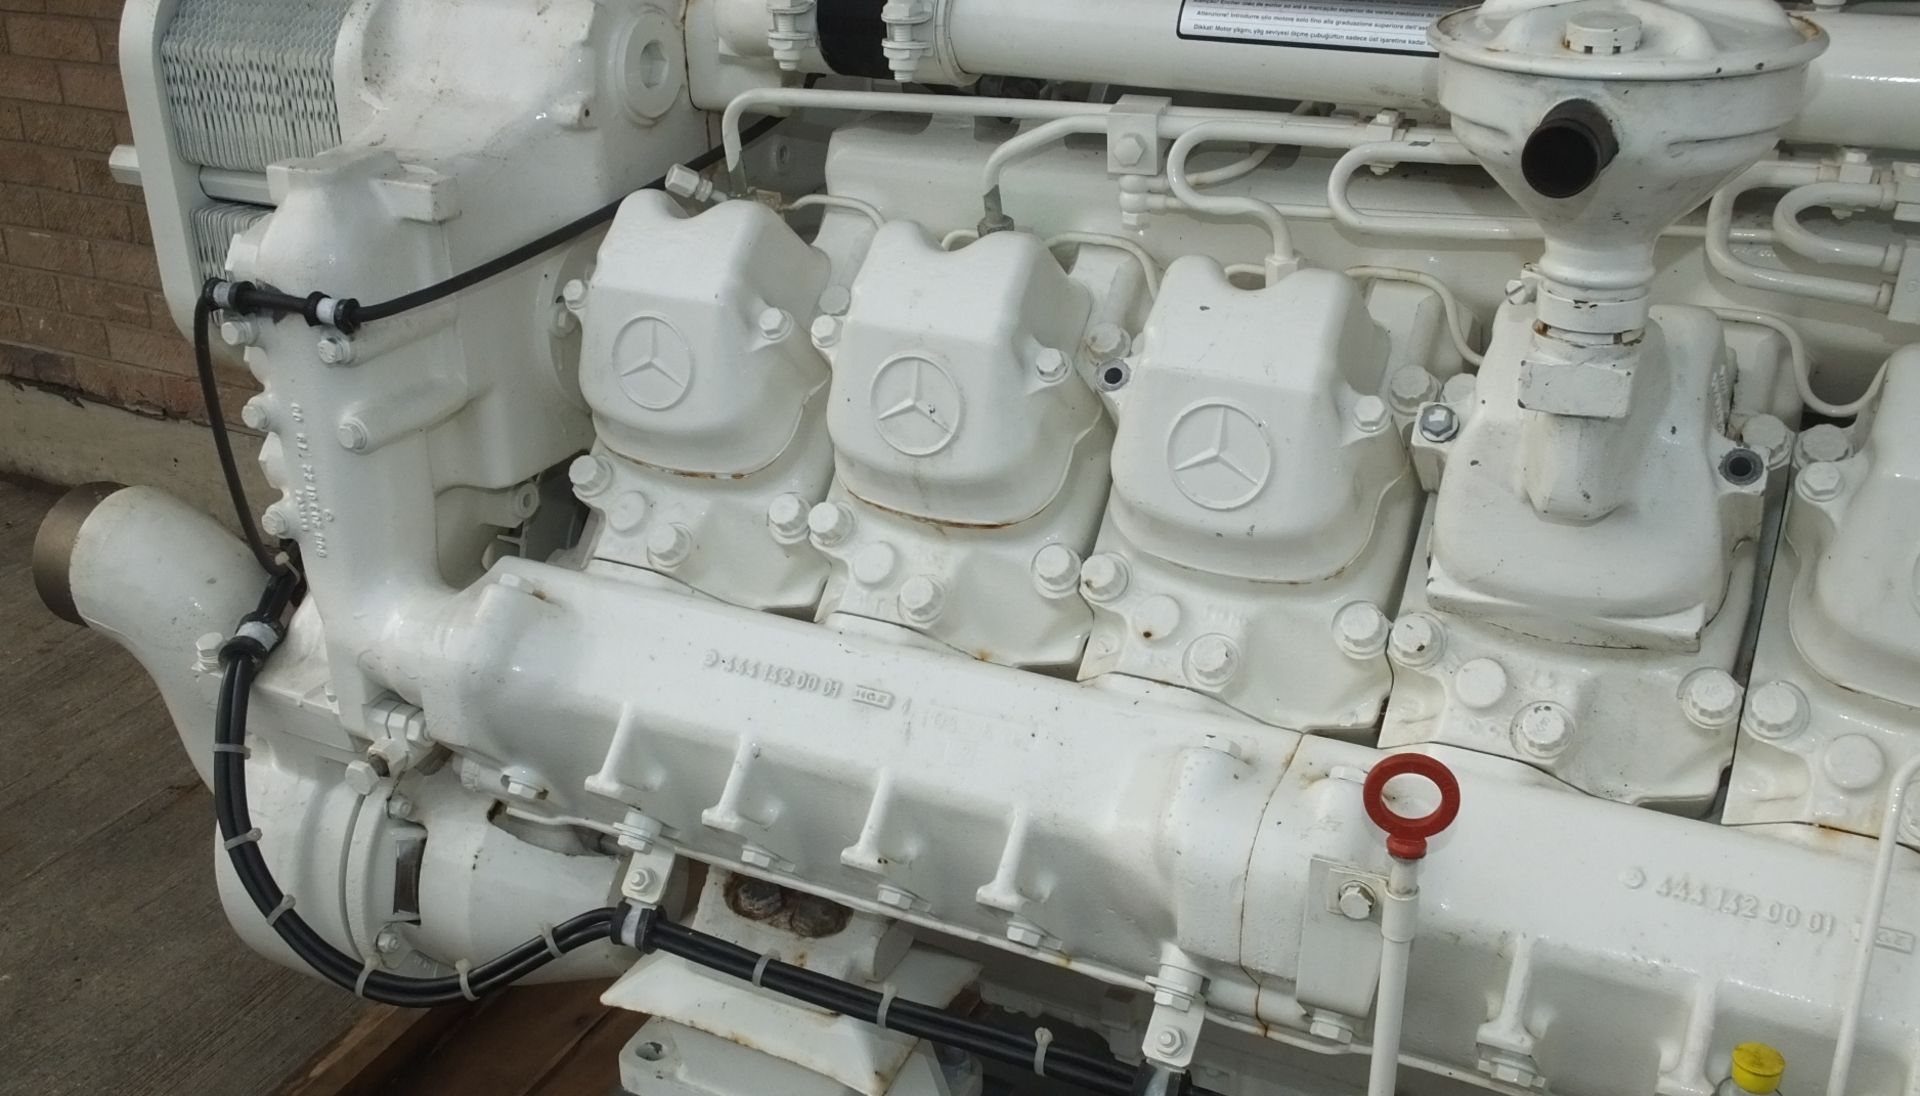 MTU 12V 183 engine - engine code OM 444 LA - 610kW - 1310HP - 2100 RPM - Gearbox ZF Marine - Image 27 of 37